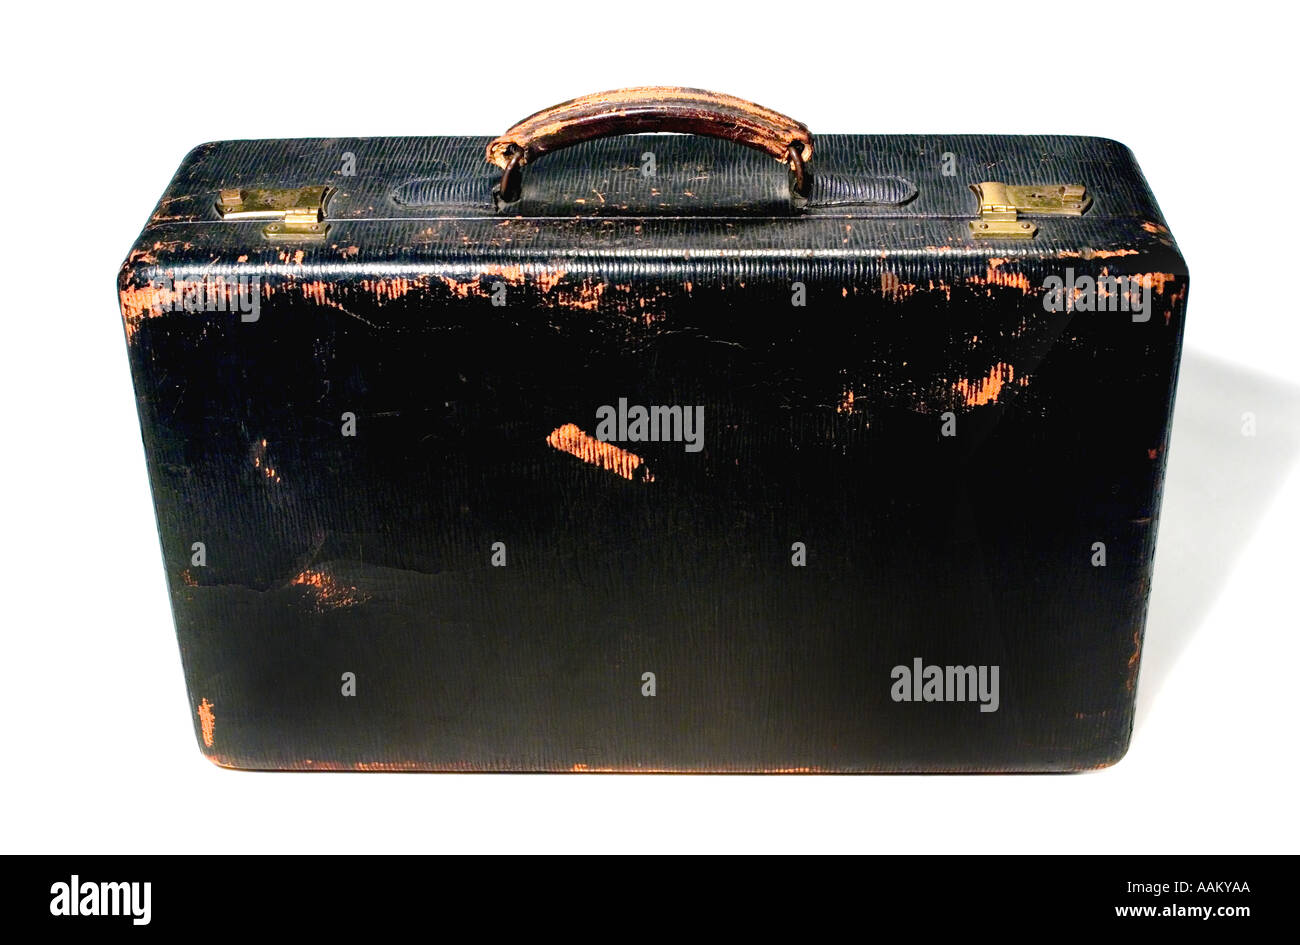 Old black Suitcase travel traveling carry on pulls bag valise overnight luggage case grip Stock Photo